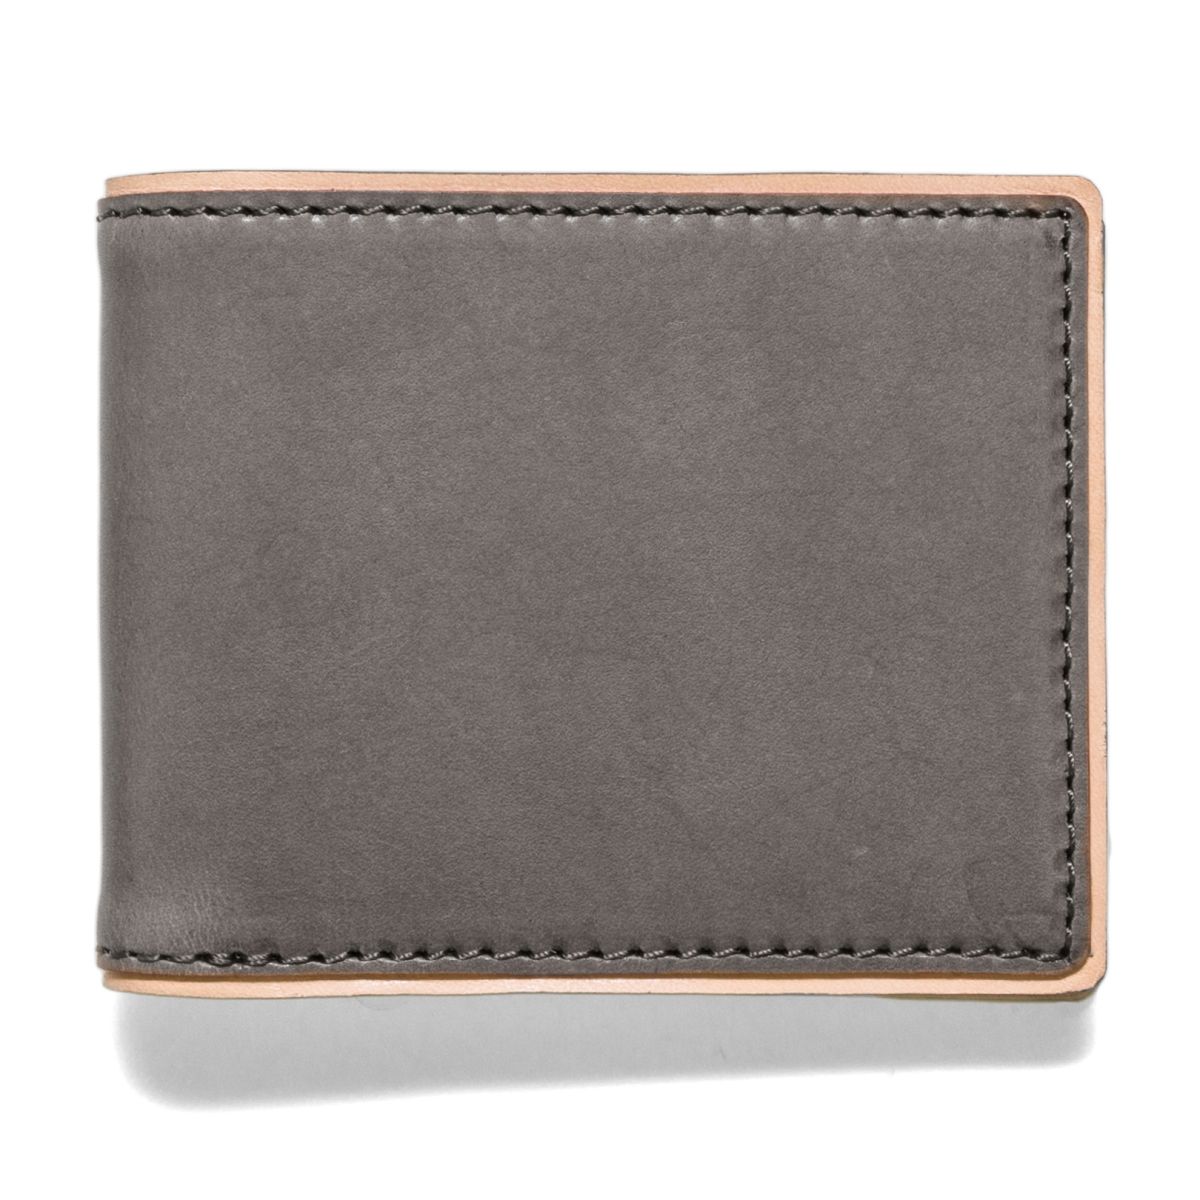 J.FOLD DUOTONE Leather Wallet - Grey